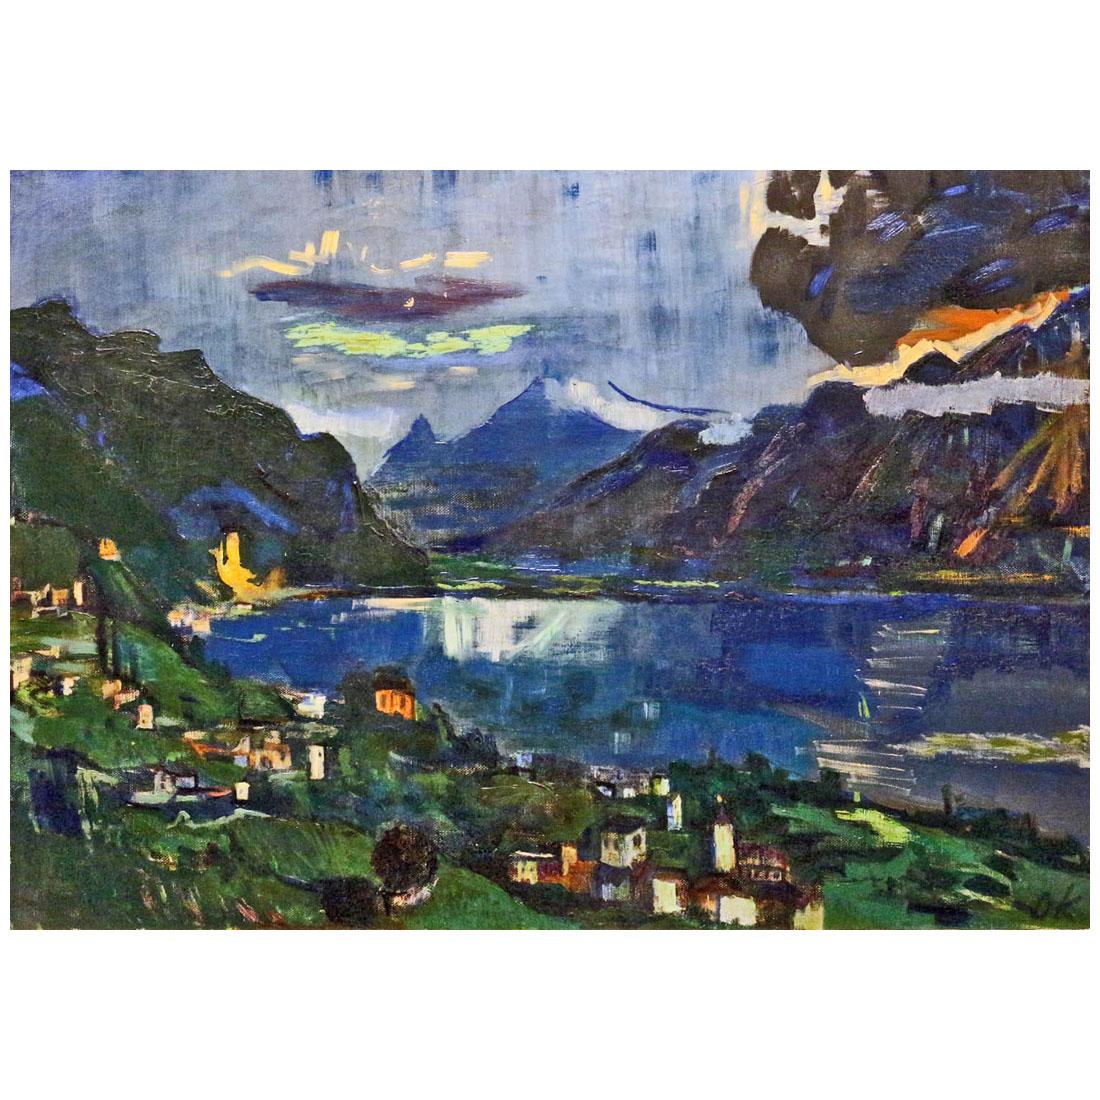 Oskar Kokoschka. Genfer See (Lake Geneve). 1923. Museum Ulm